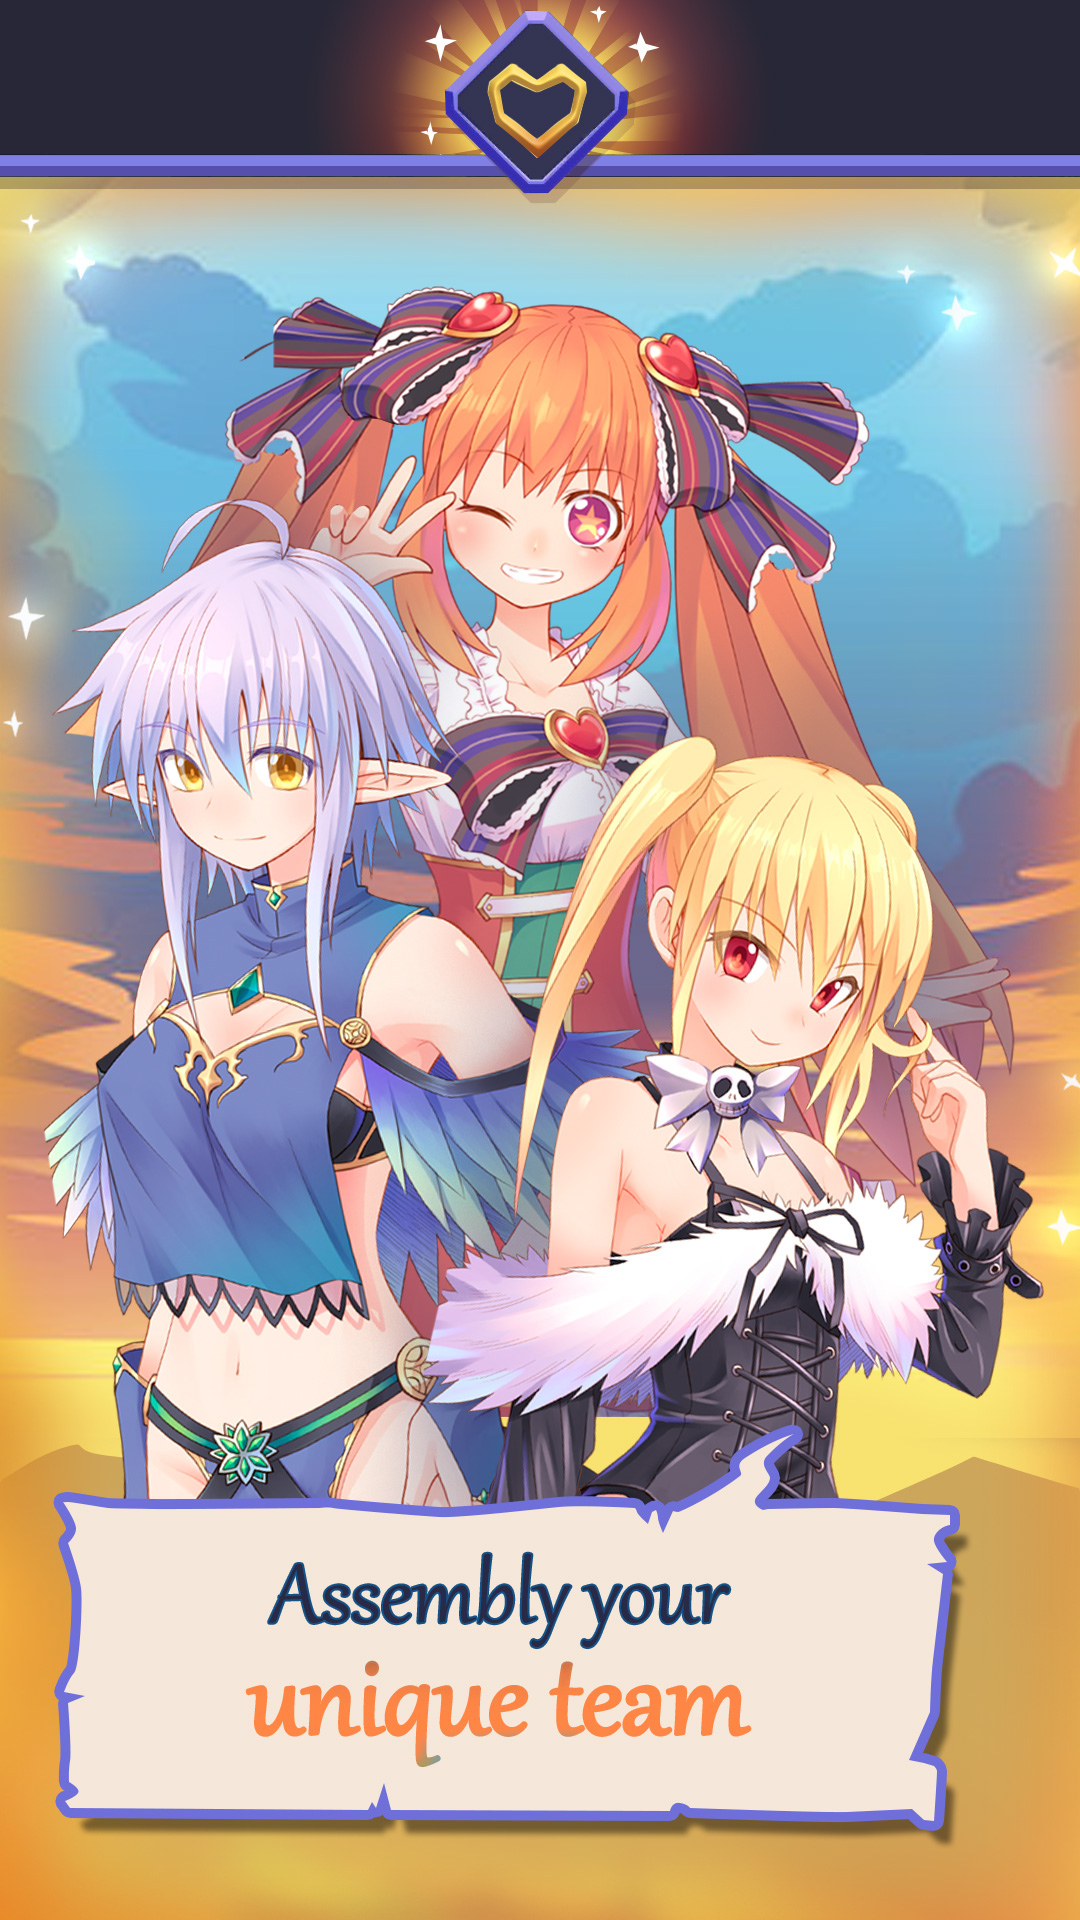 Descargar Fantasy town: Anime girls story gratis para Android A.n.d.r.o.i.d. .5...0. .a.n.d. .m.o.r.e.